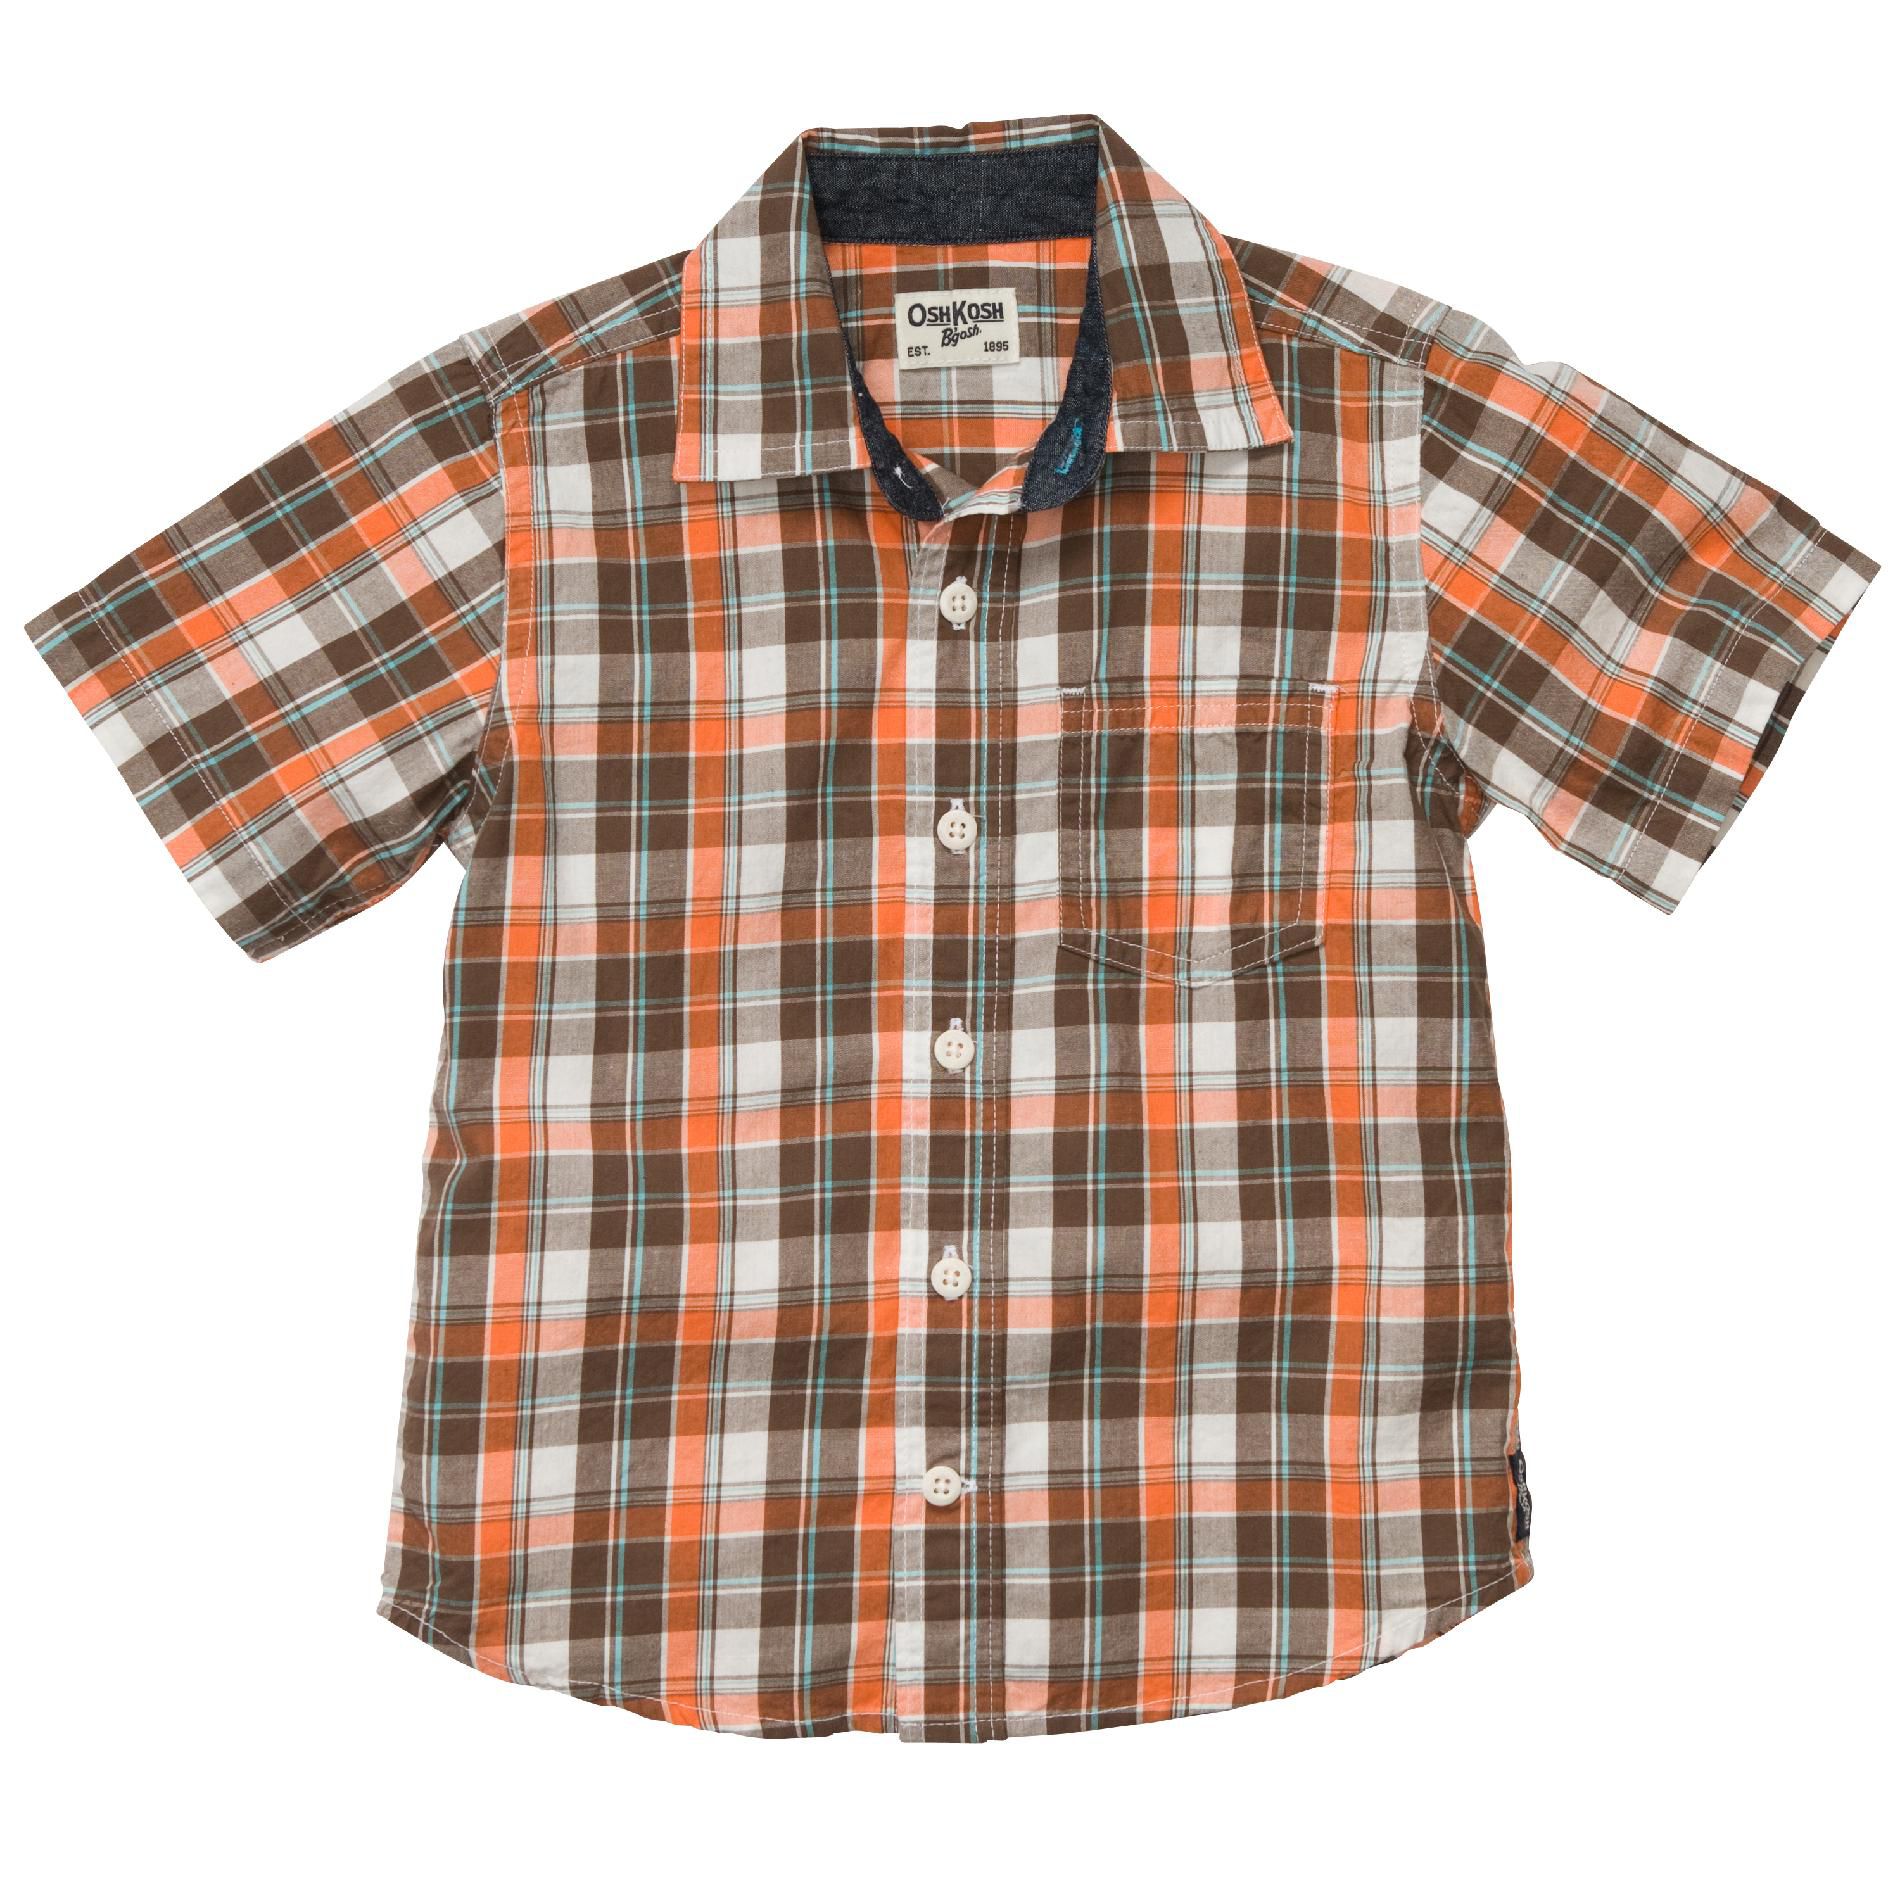 OshKosh Boys Infant/Toddler Shirt Plaid Brown/Orange